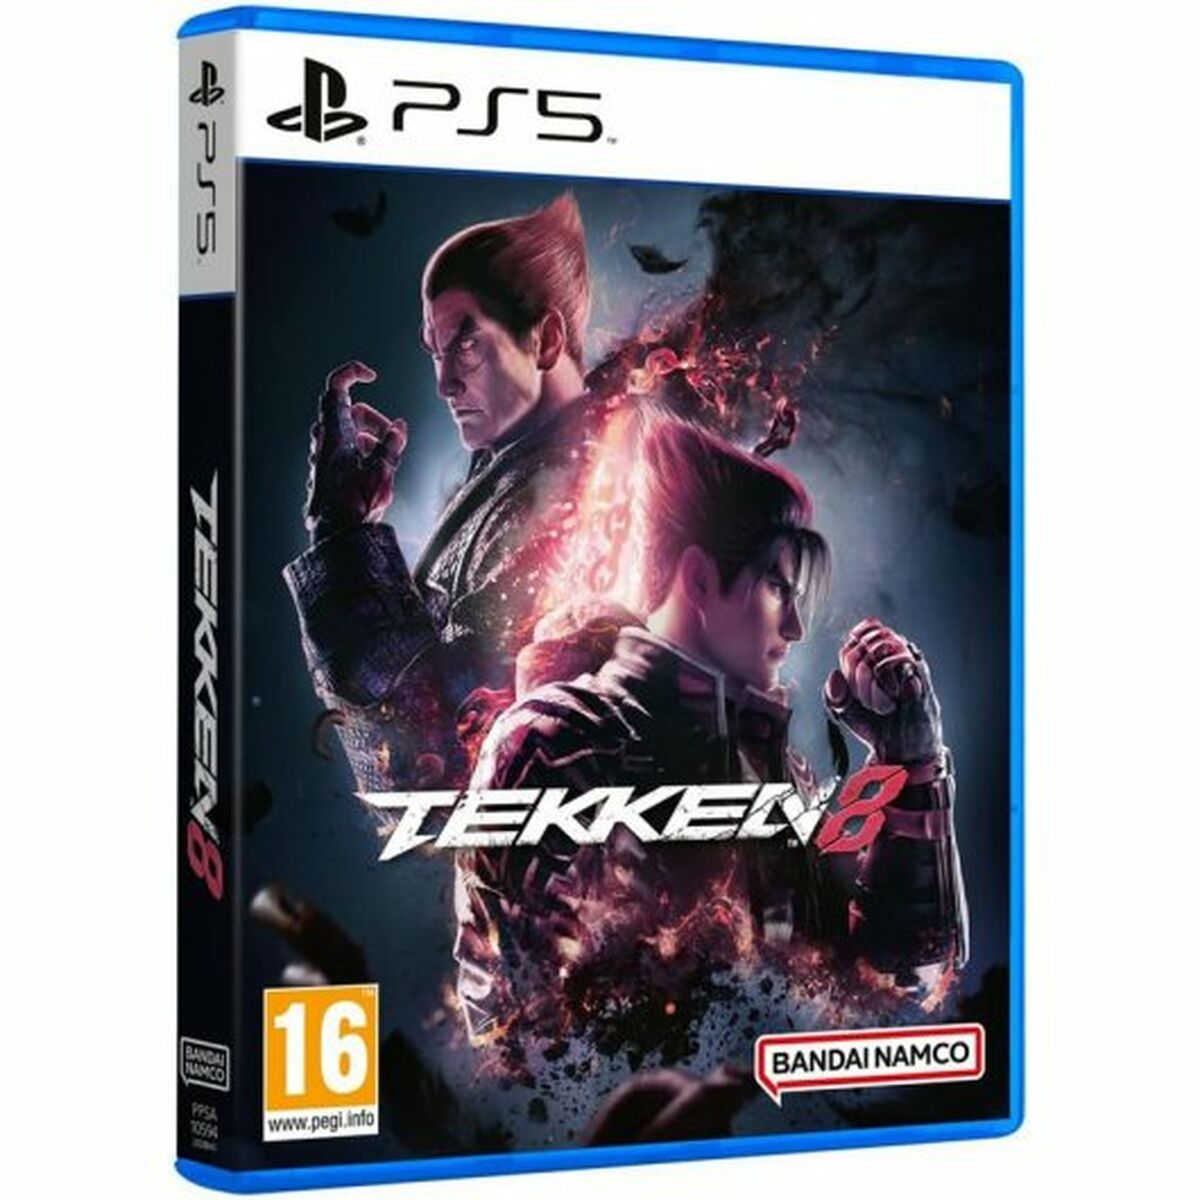 PlayStation 5 Videospiel Bandai Namco Tekken 8 Launch Edition